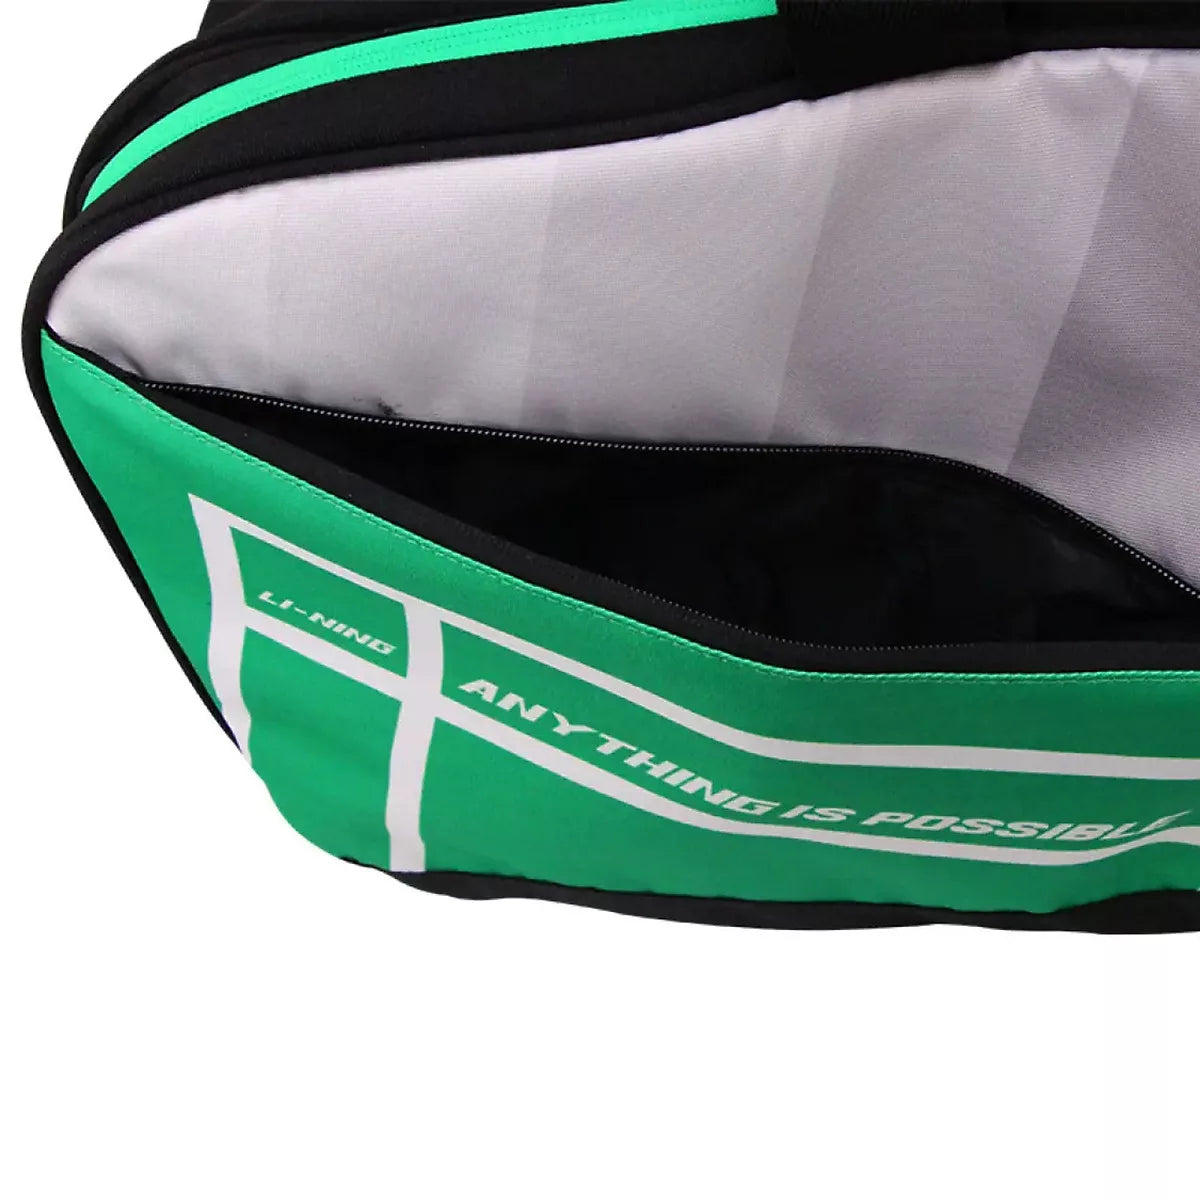 Li-Ning Badminton Bag 6-Rackets Square  - Green